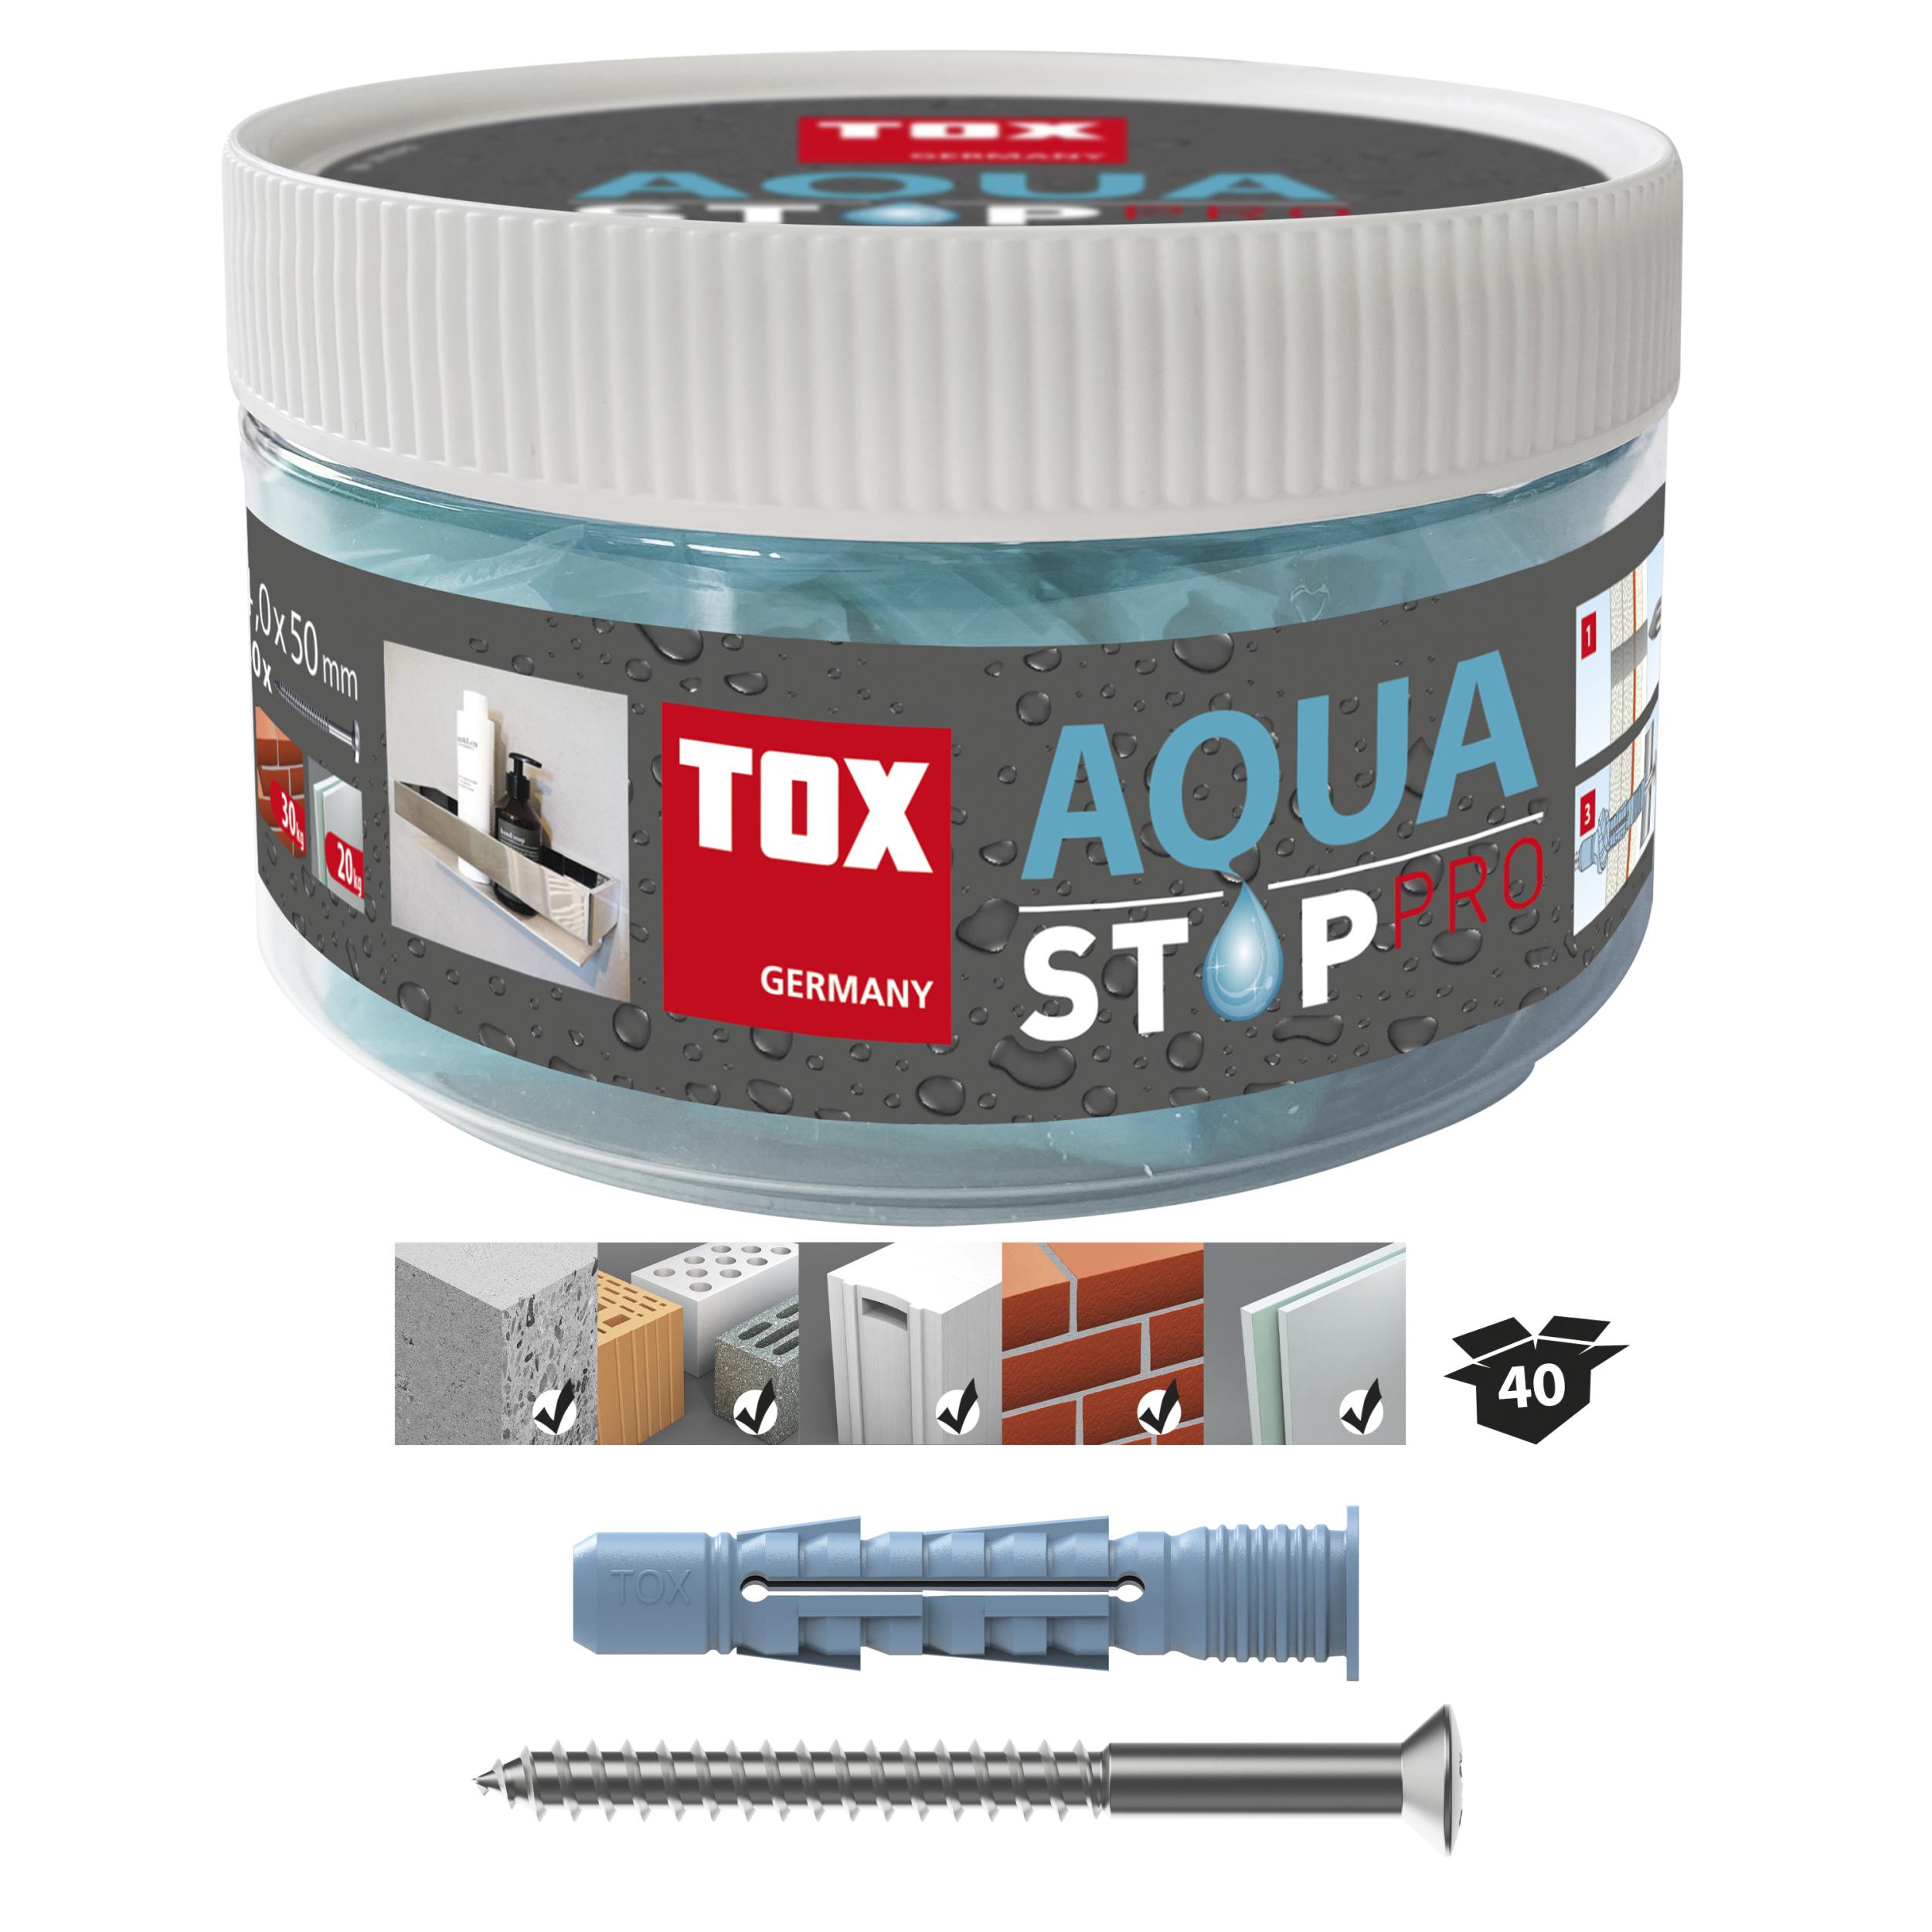 TOX Allzweckdübel Aqua Stop Pro - verschiedene Ausführungen